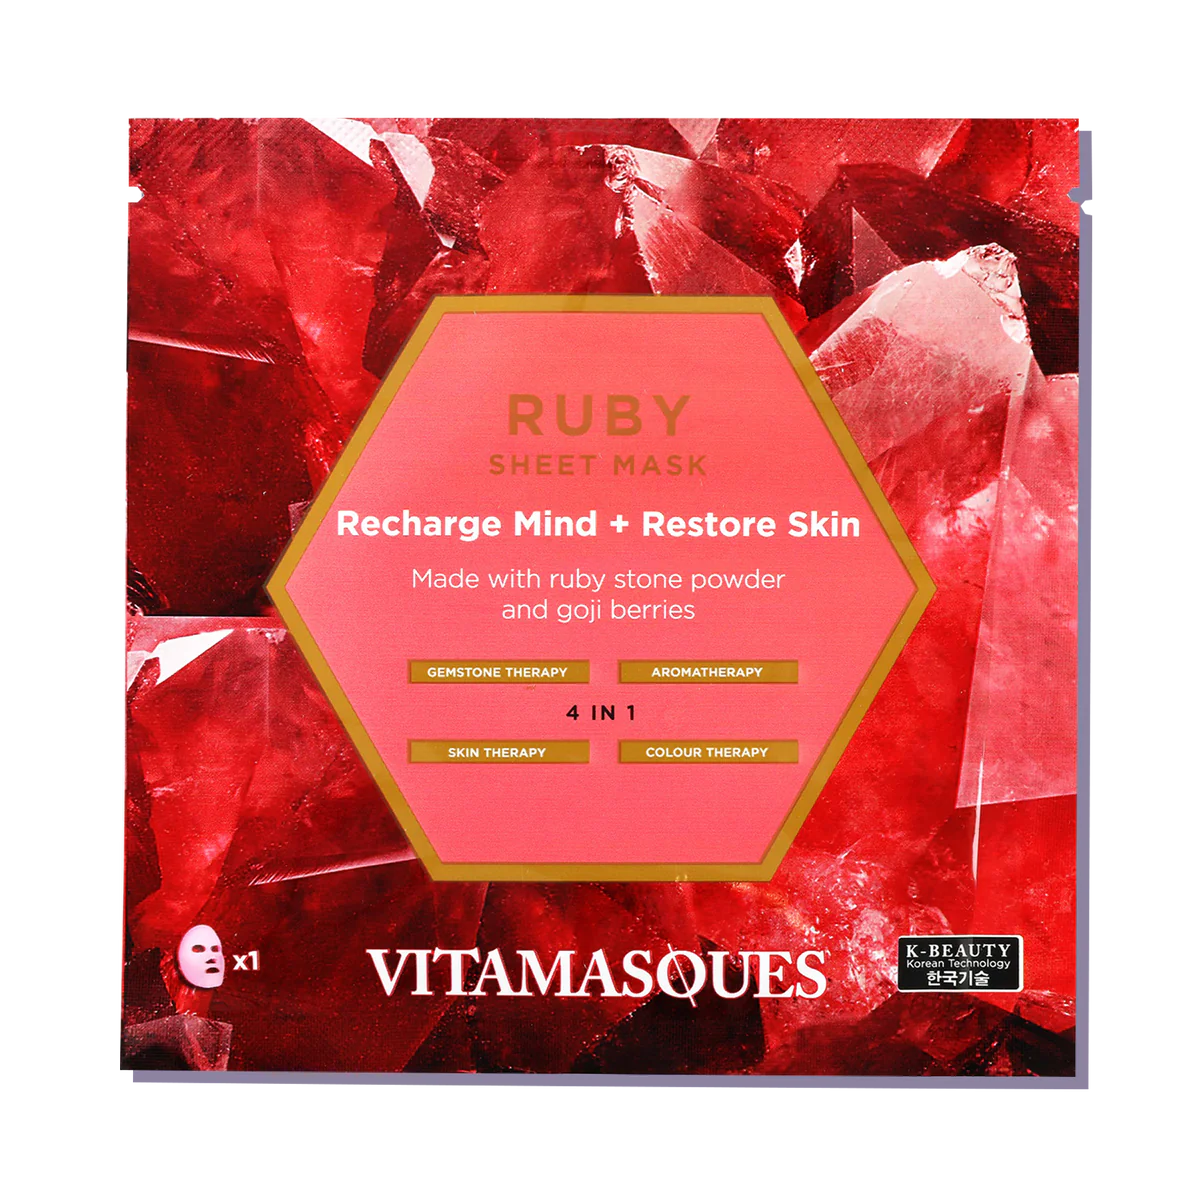 Vitamasques - Sheet Mask Ruby